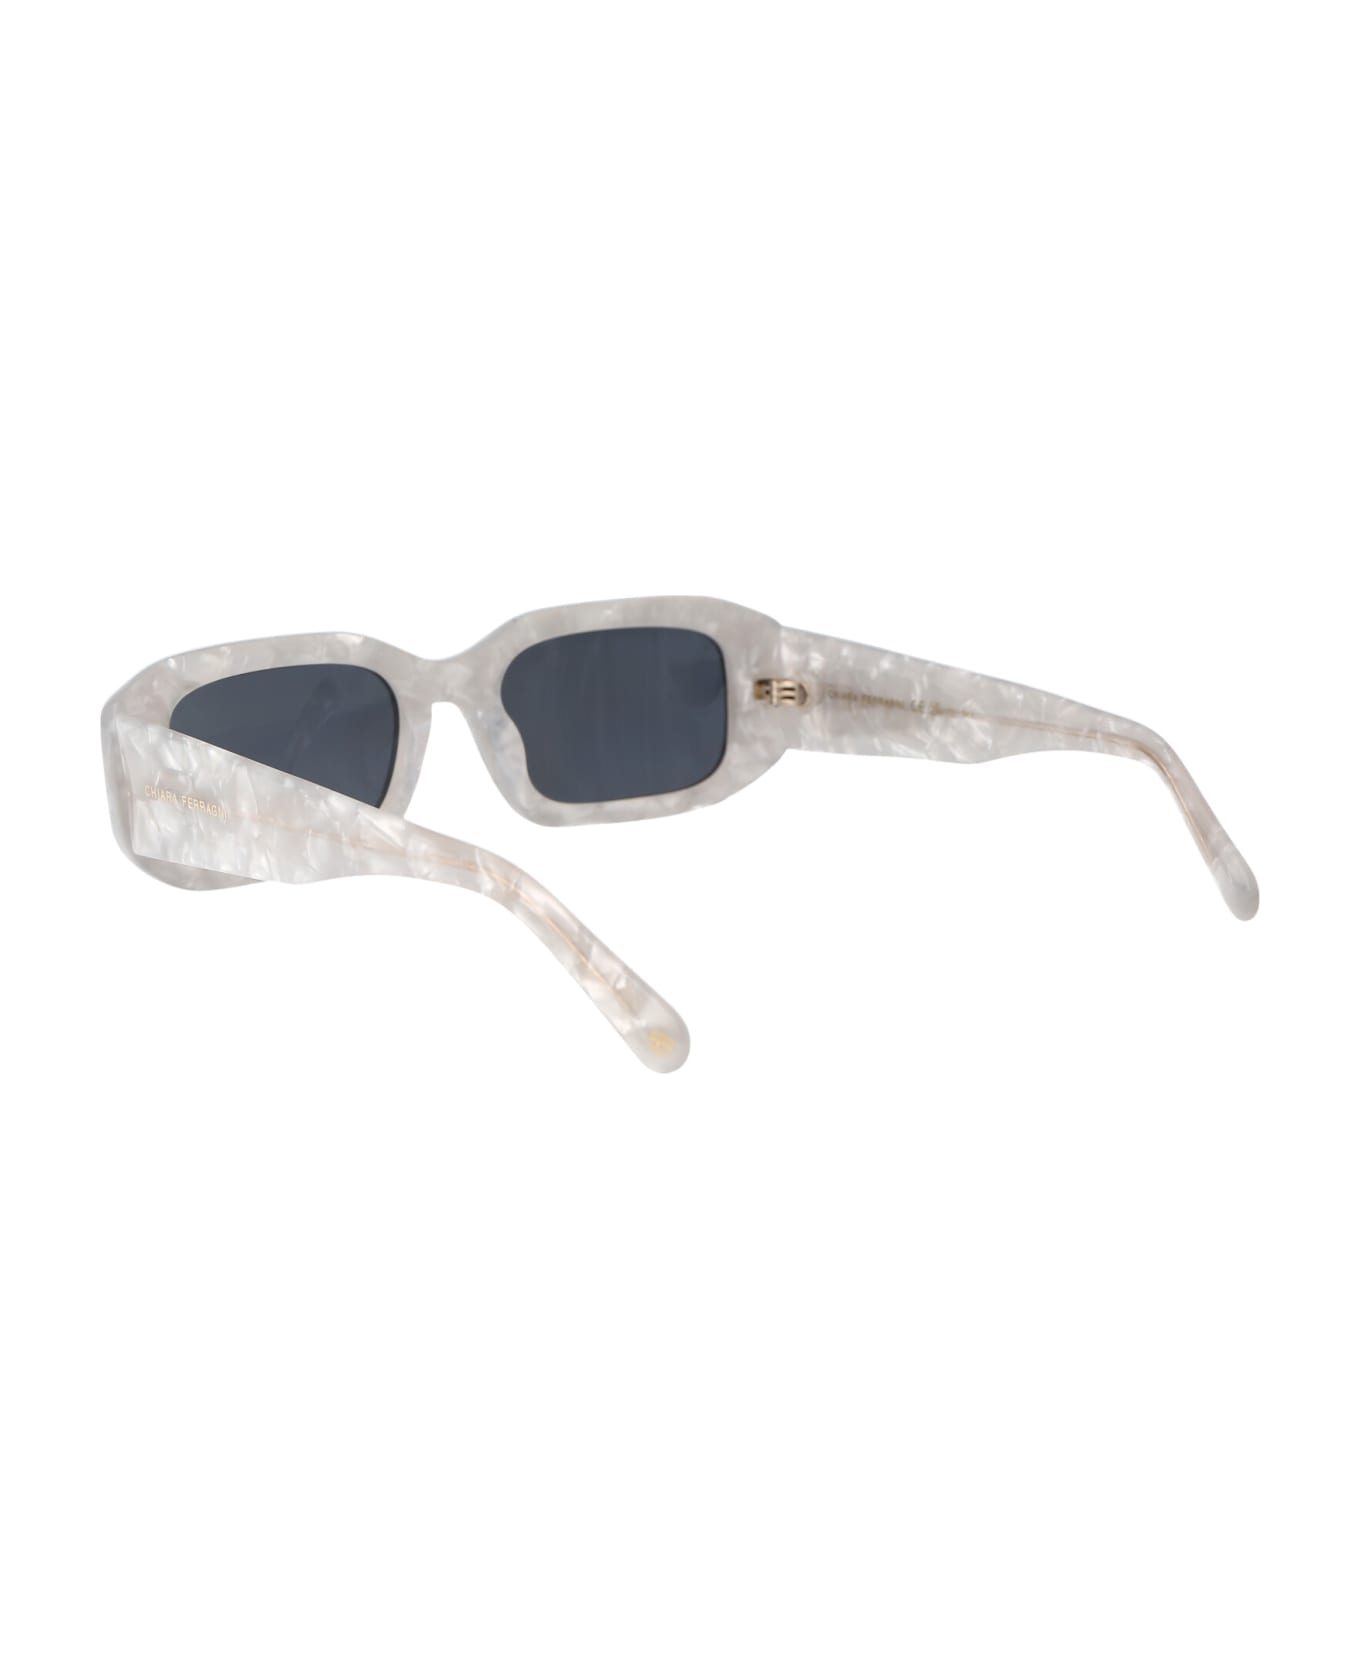 Chiara Ferragni Cf 7031/s Sunglasses - 7APIR PEARLED WHITE